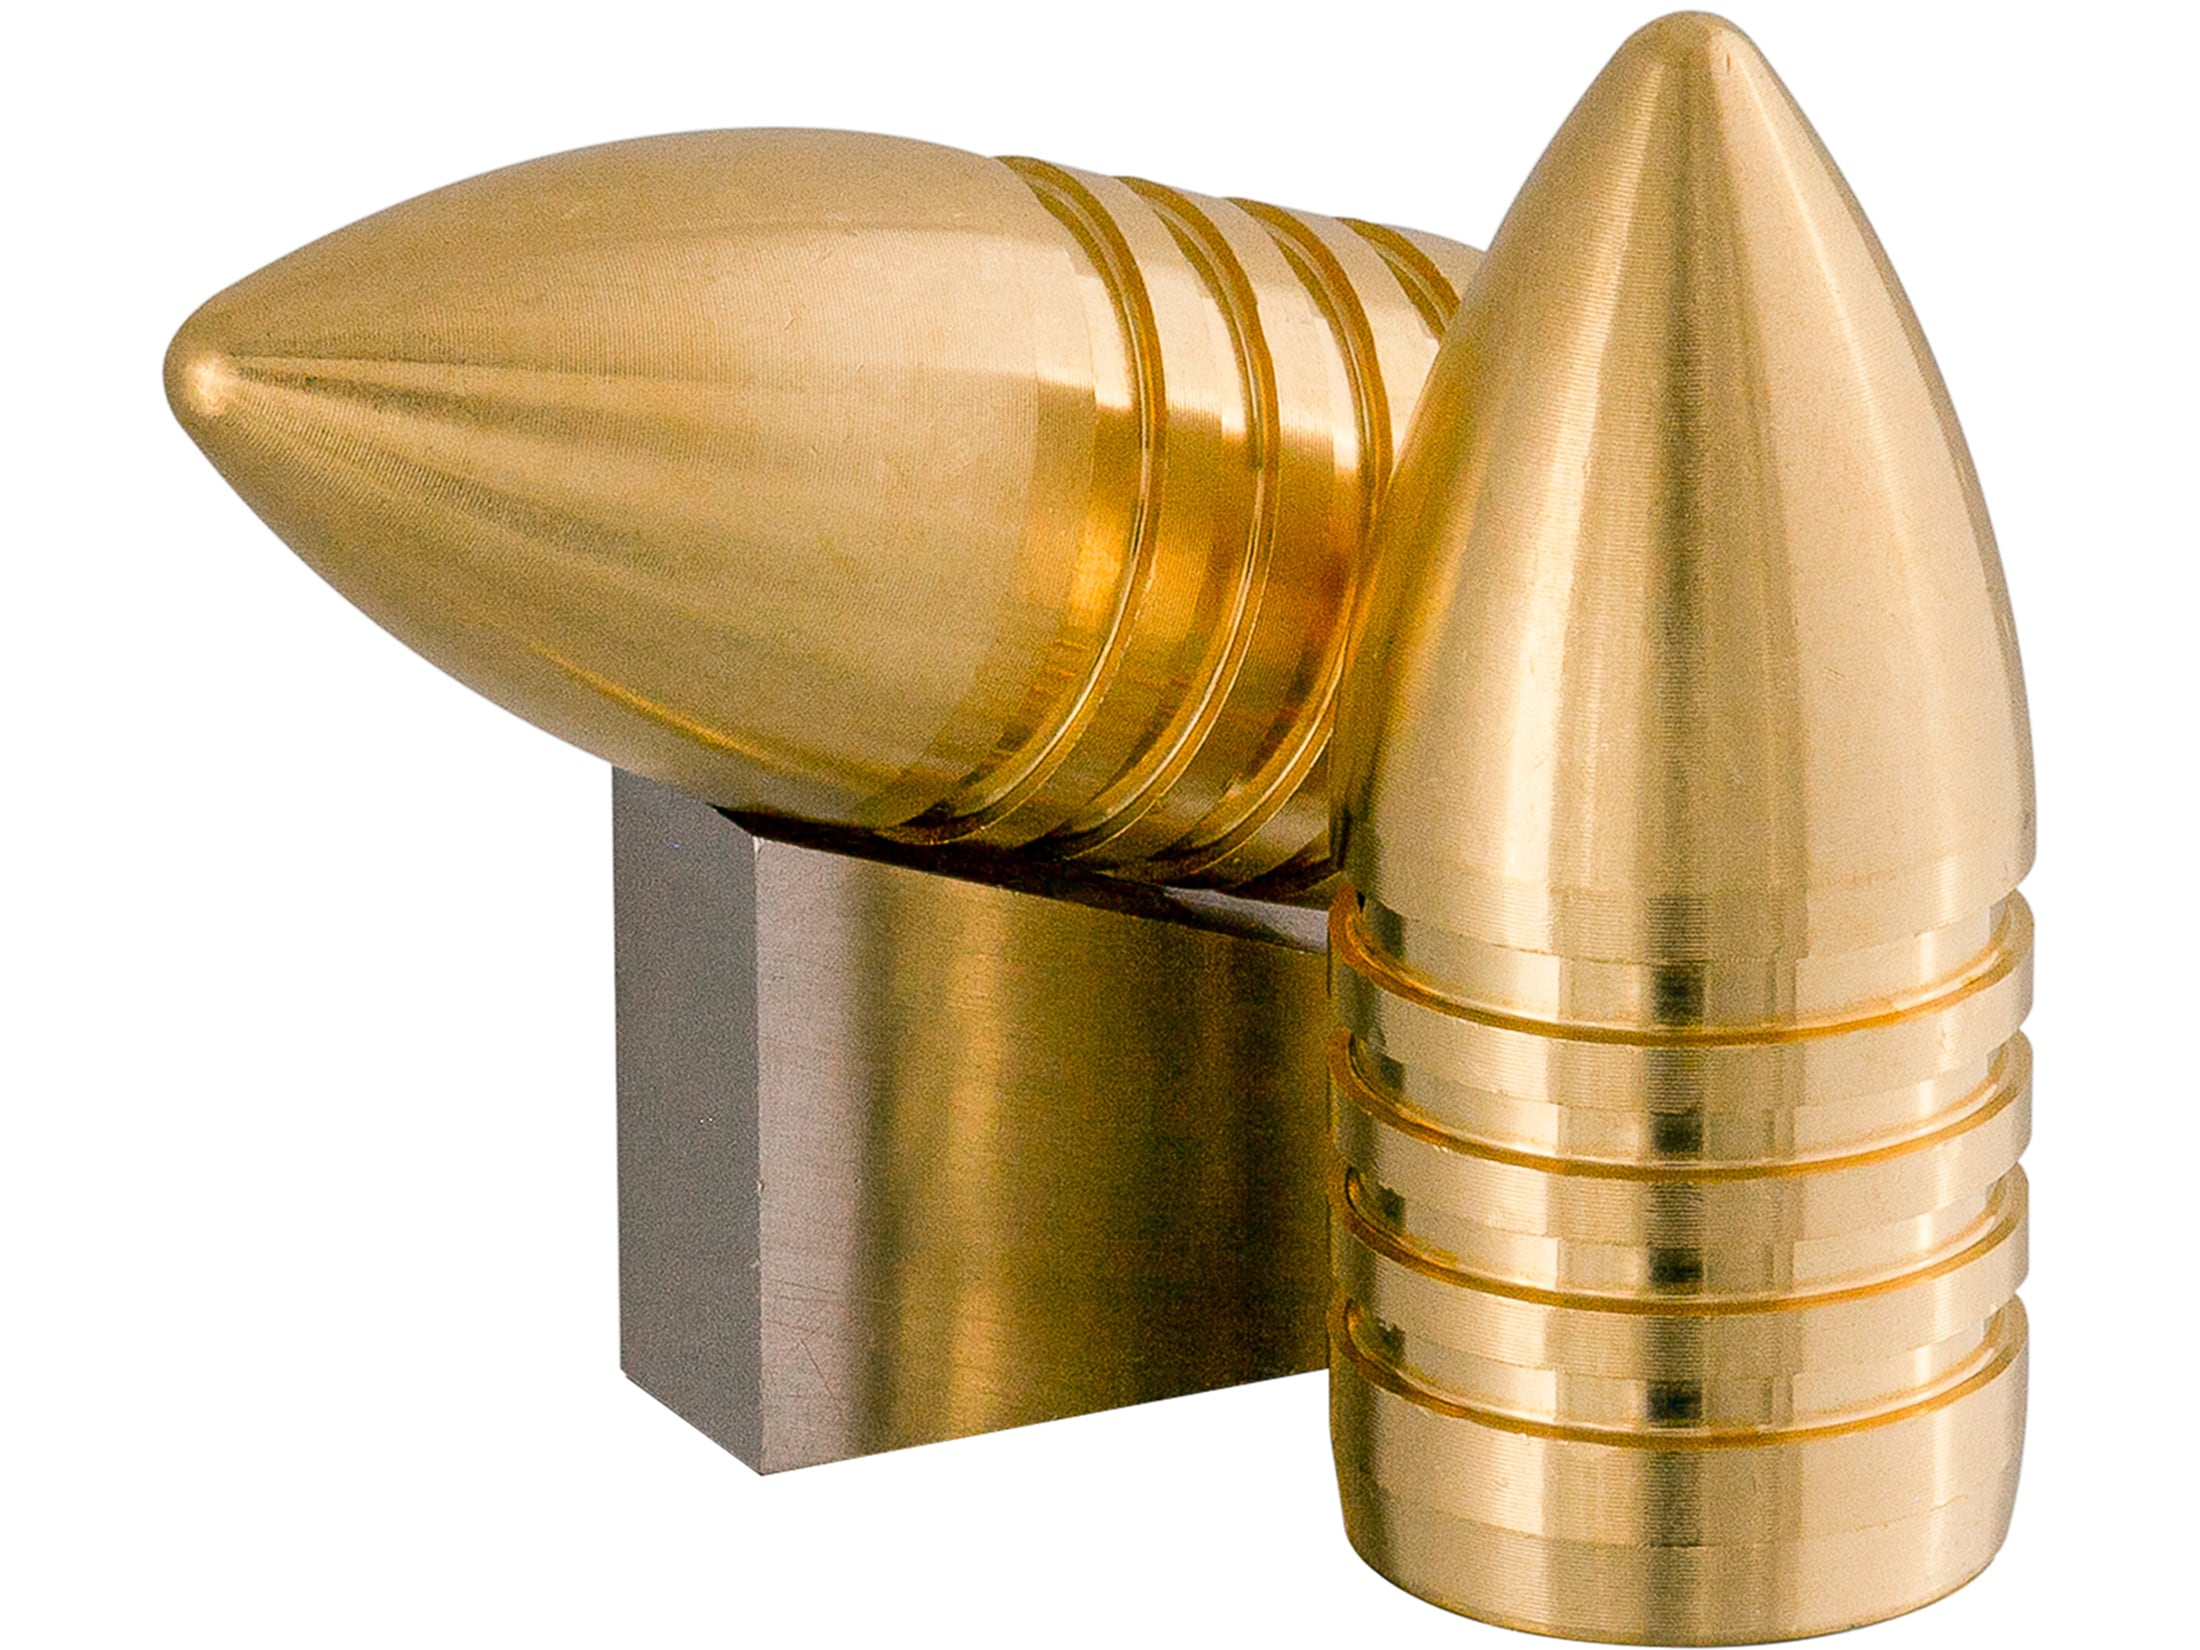 Lehigh Defense Match Solid Bullets 50 Cal (500 Diameter) 350 Grain